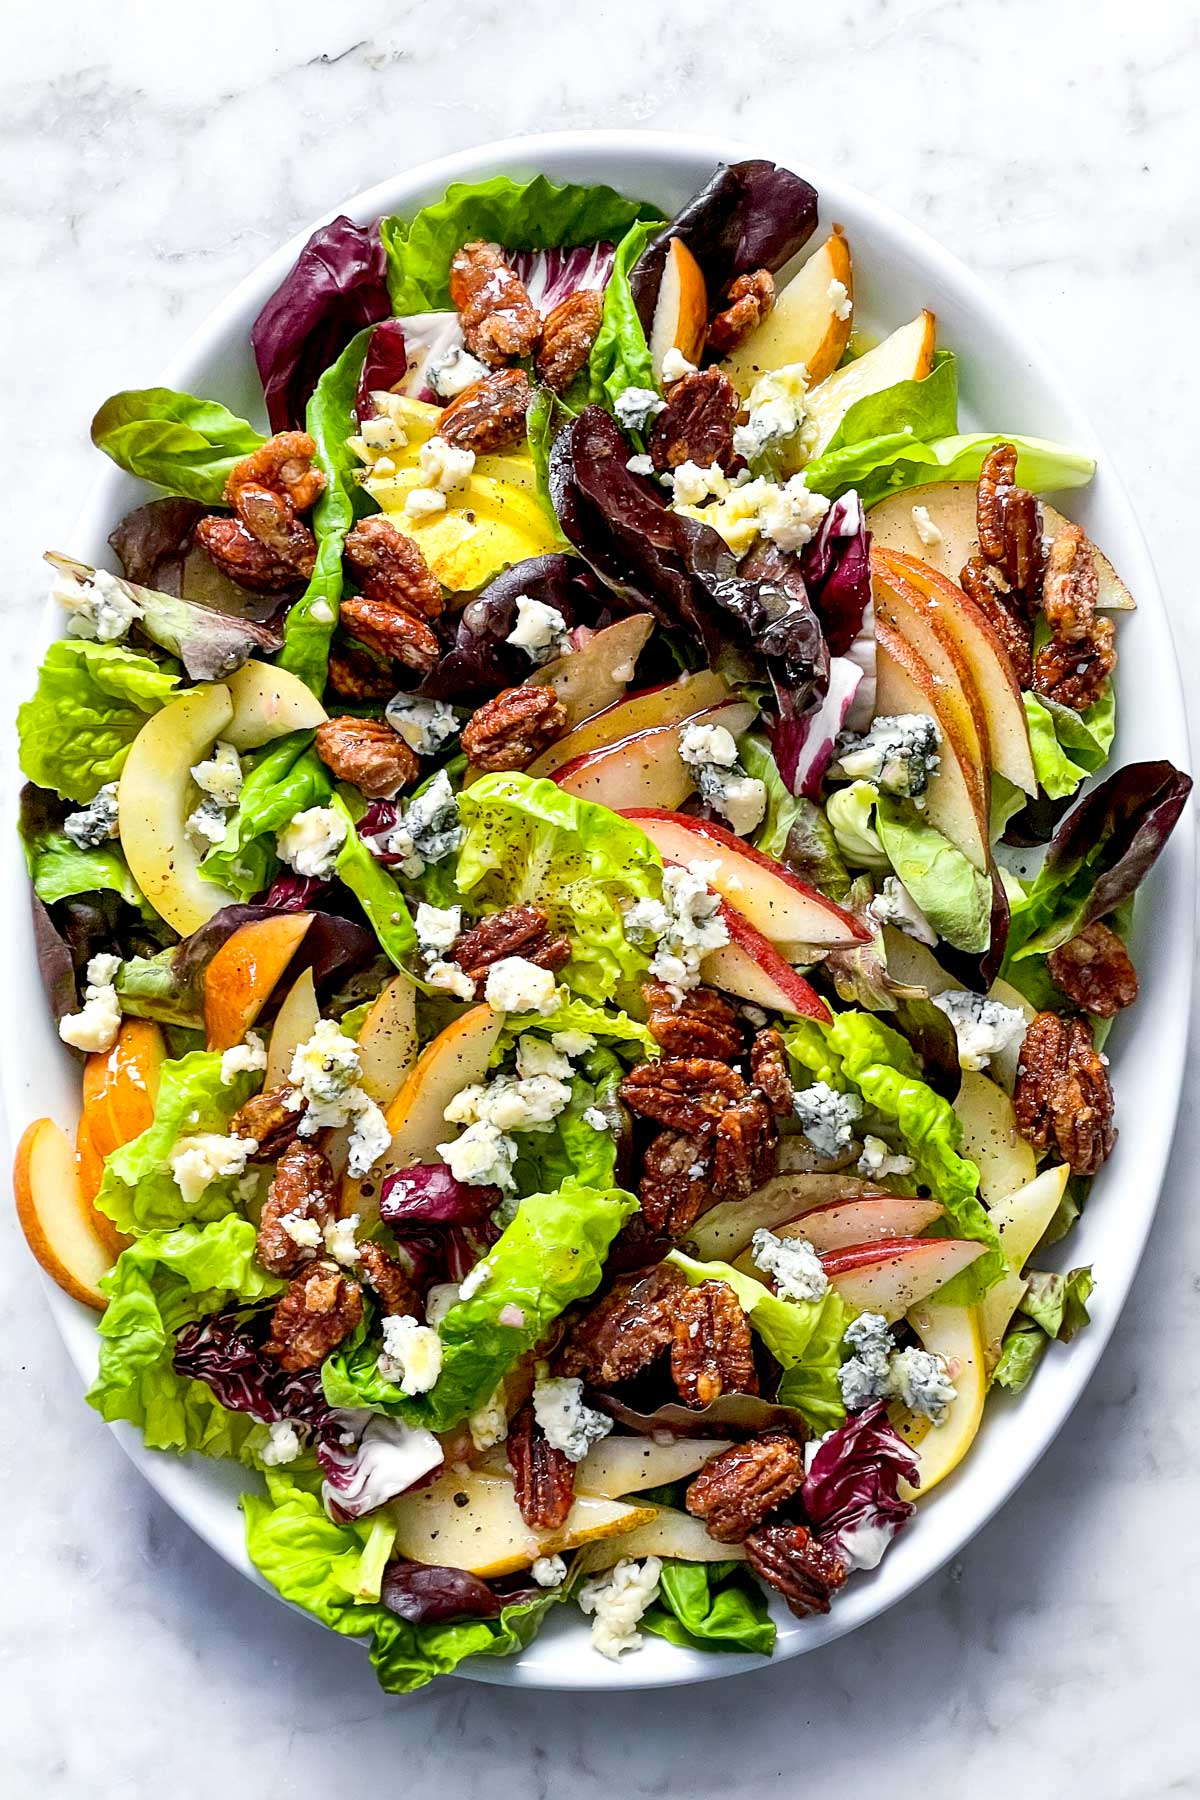 https://www.foodiecrush.com/wp-content/uploads/2021/12/Pear-Gorgonzola-Salad-foodiecrush.com-007.jpg